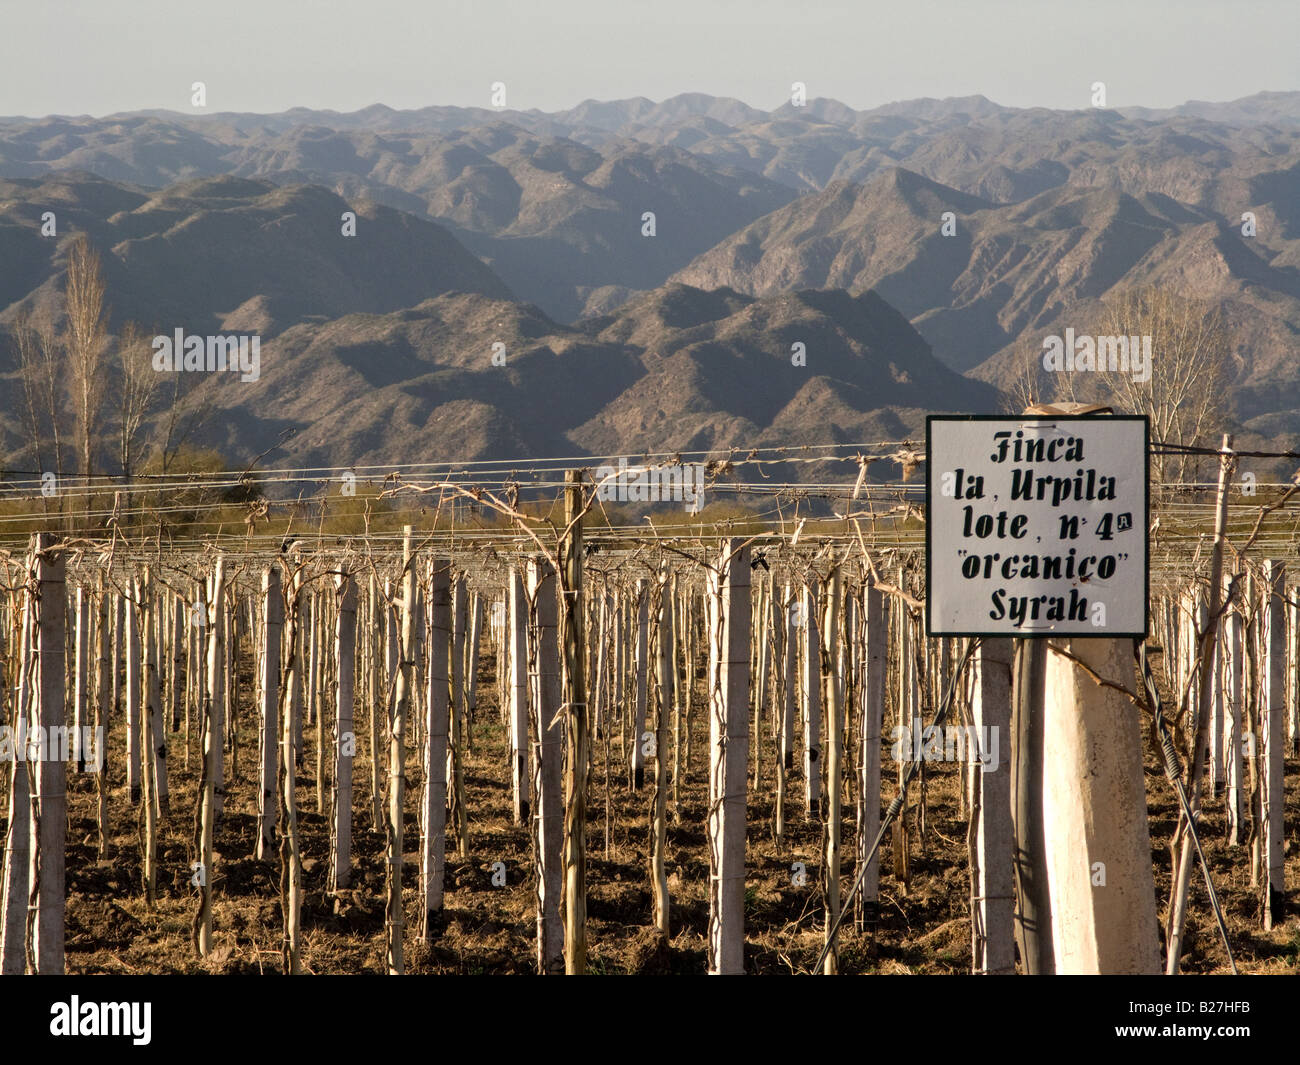 Winter aspect of an organic Syrah vineyard near San Juan city, Argentina Stock Photo